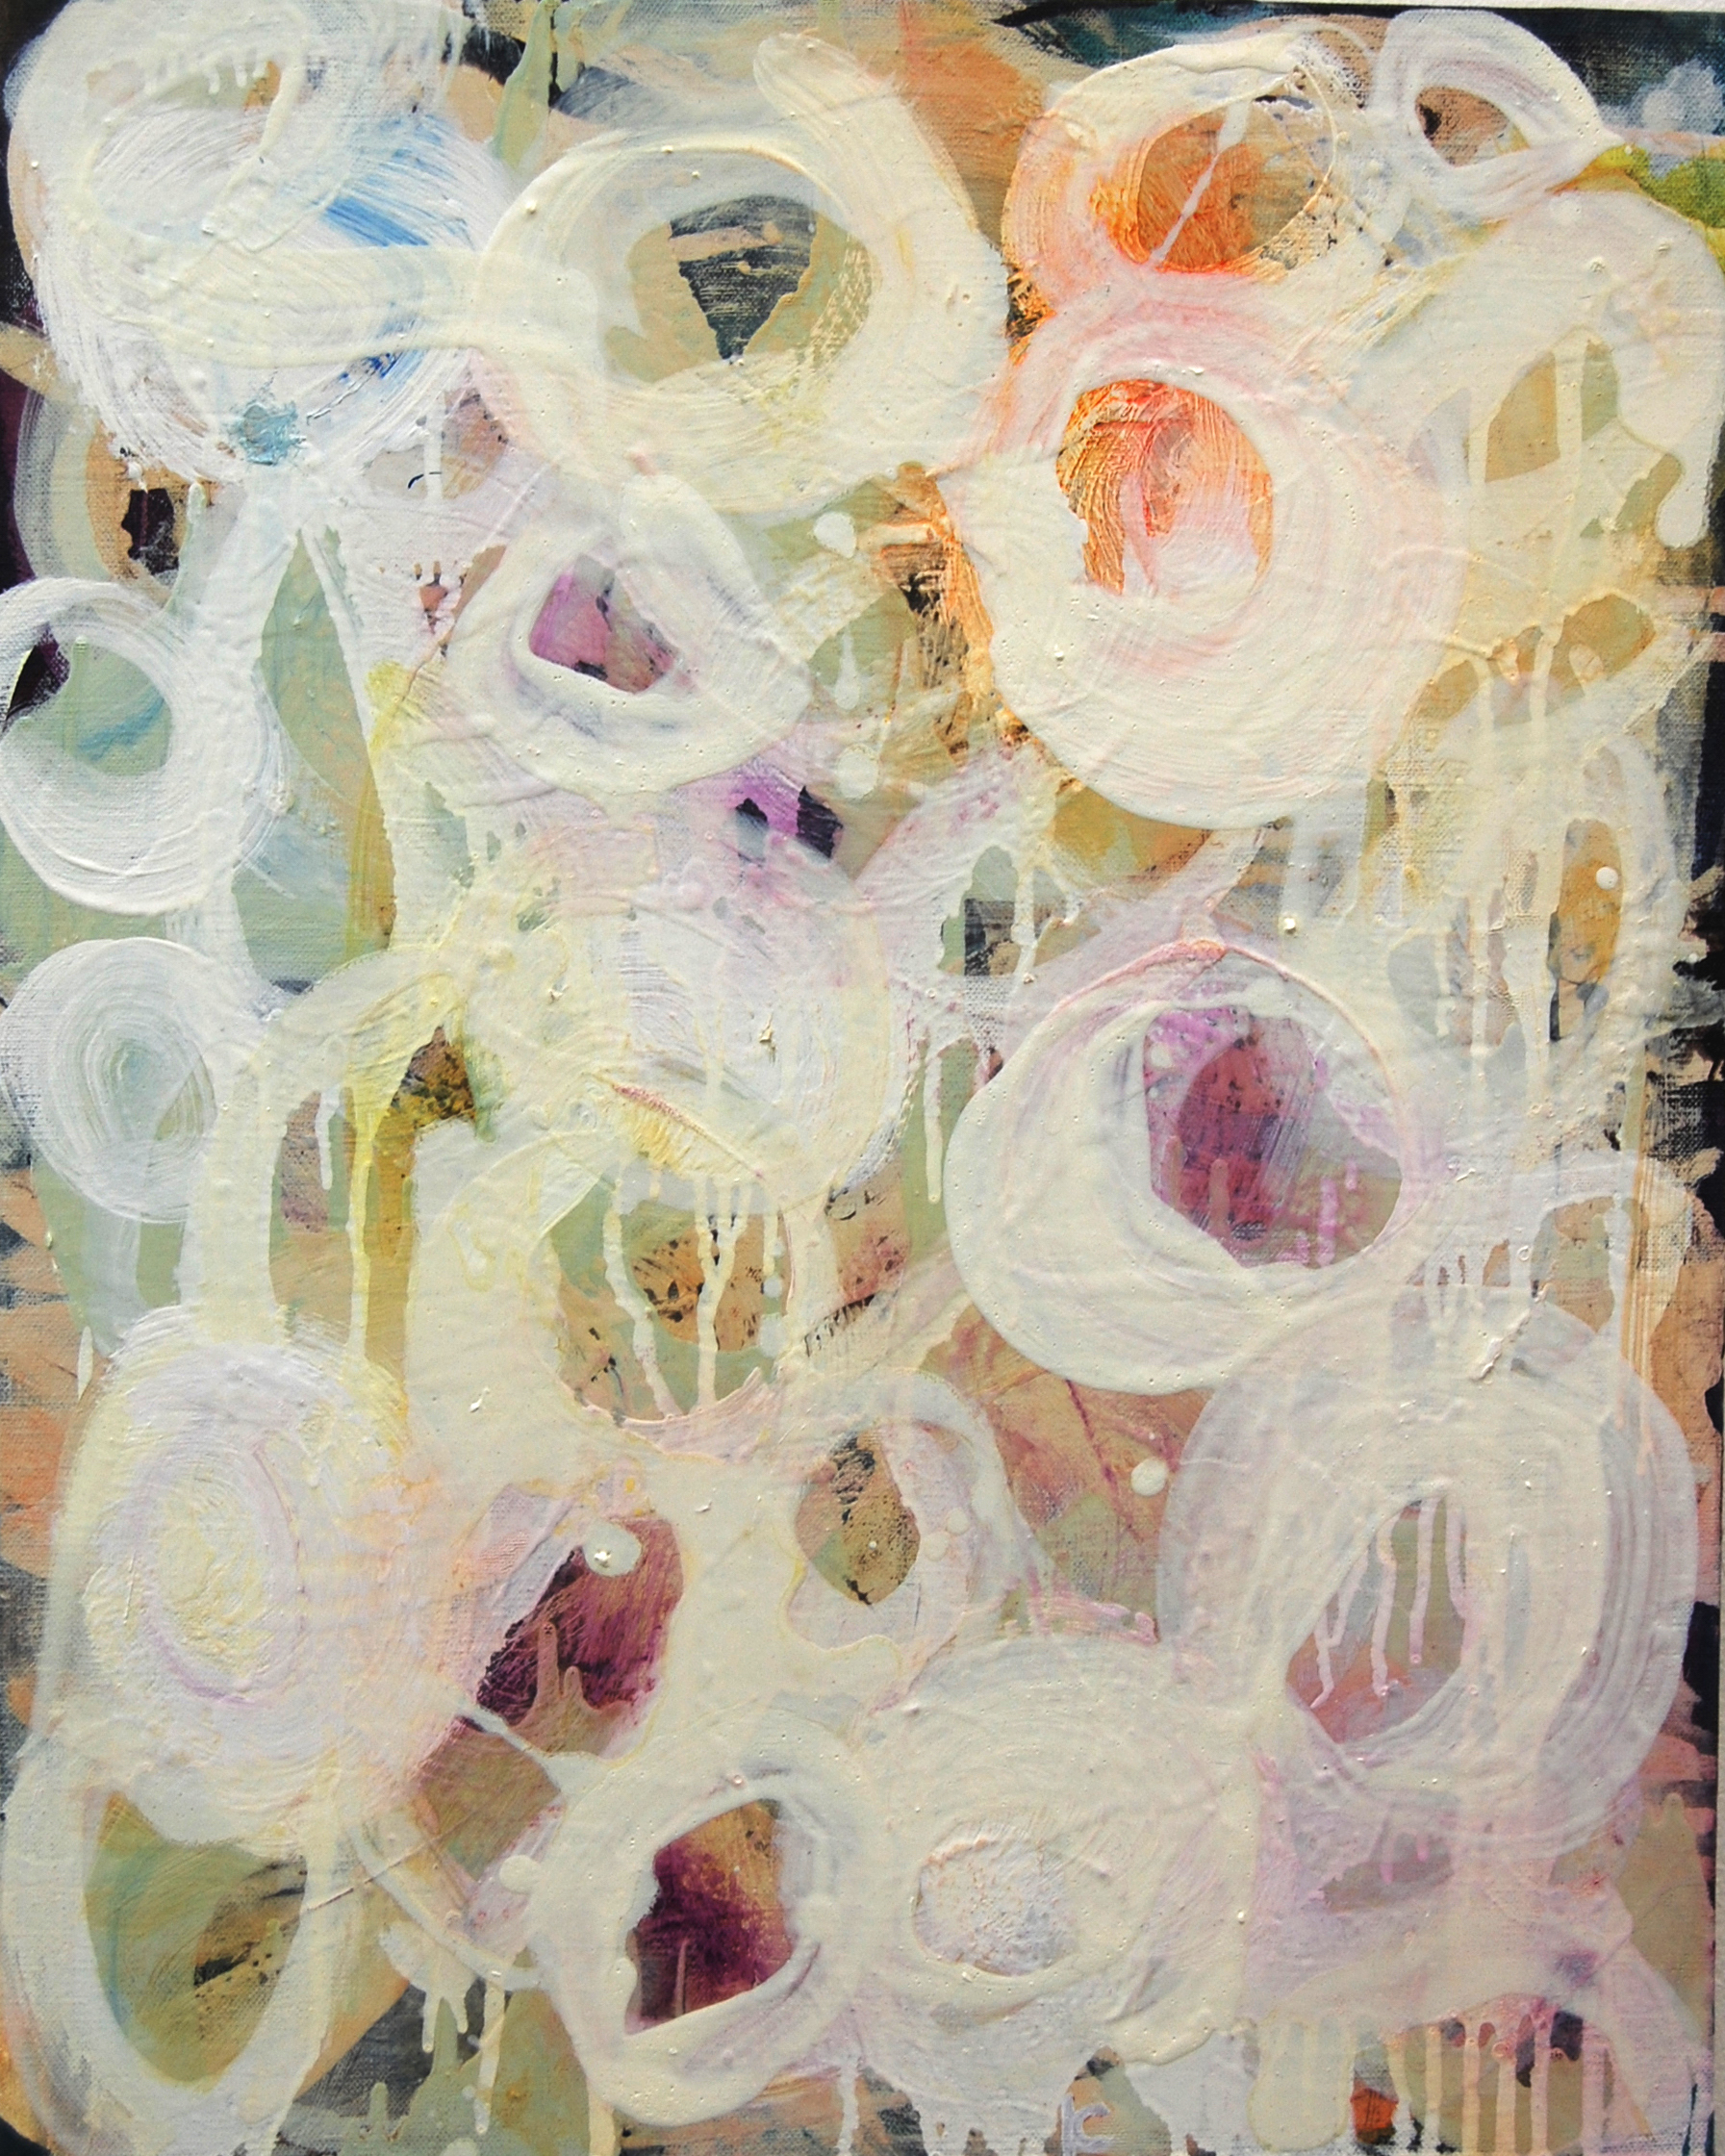   Fitzgerald, 18”x22”, Oil on Linen, Water Series, 2014  